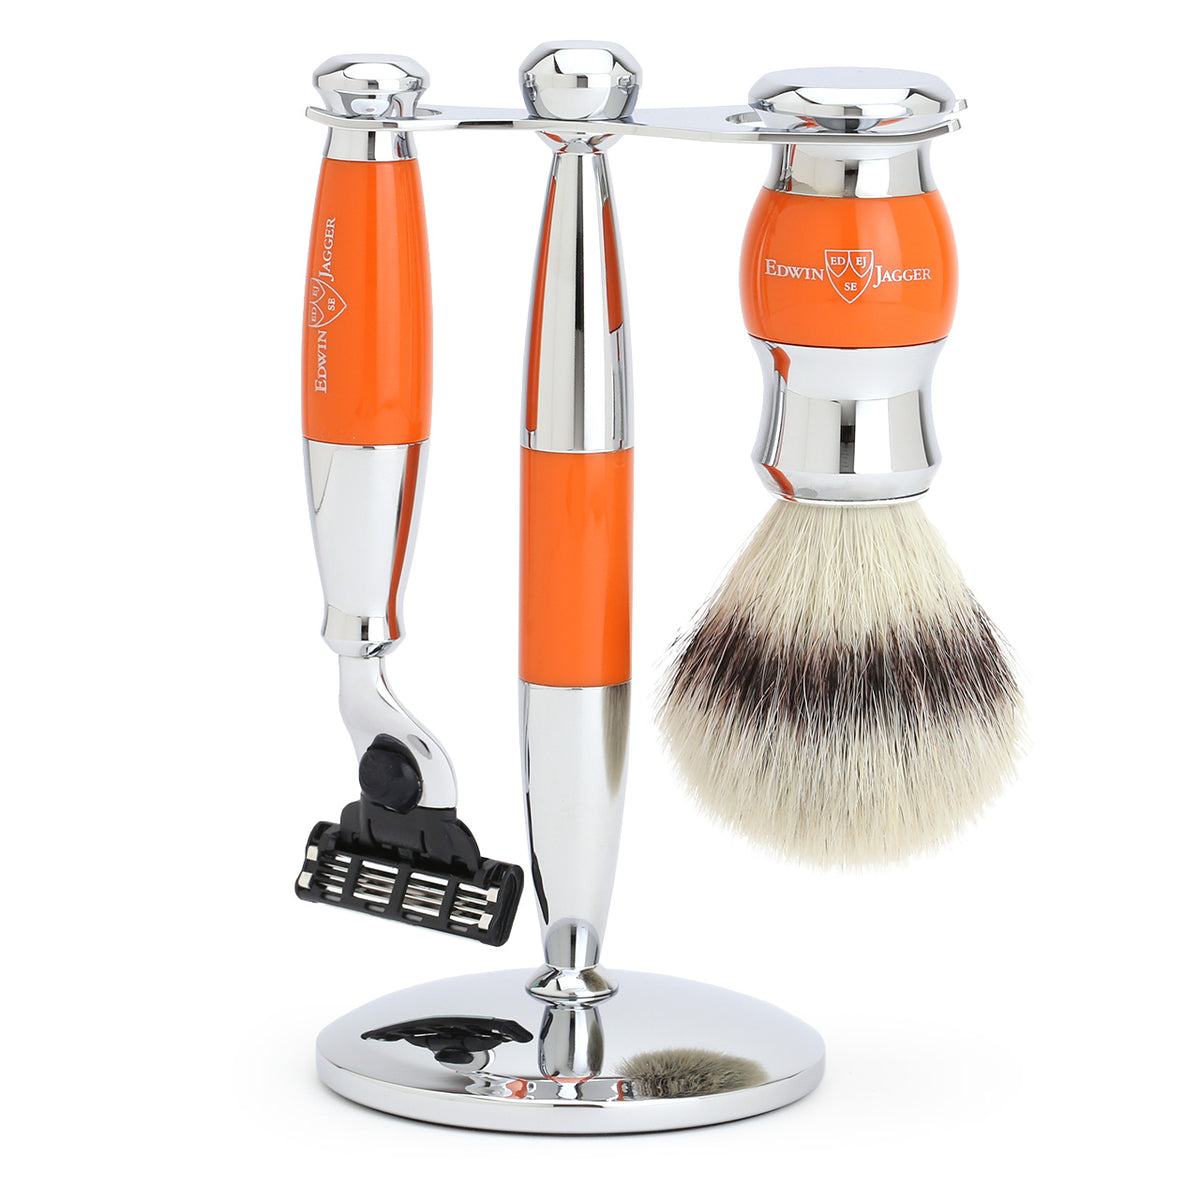 Edwin Jagger Shaving Set with Mach3 Razor, Shaving Brush &amp; Stand - Orange